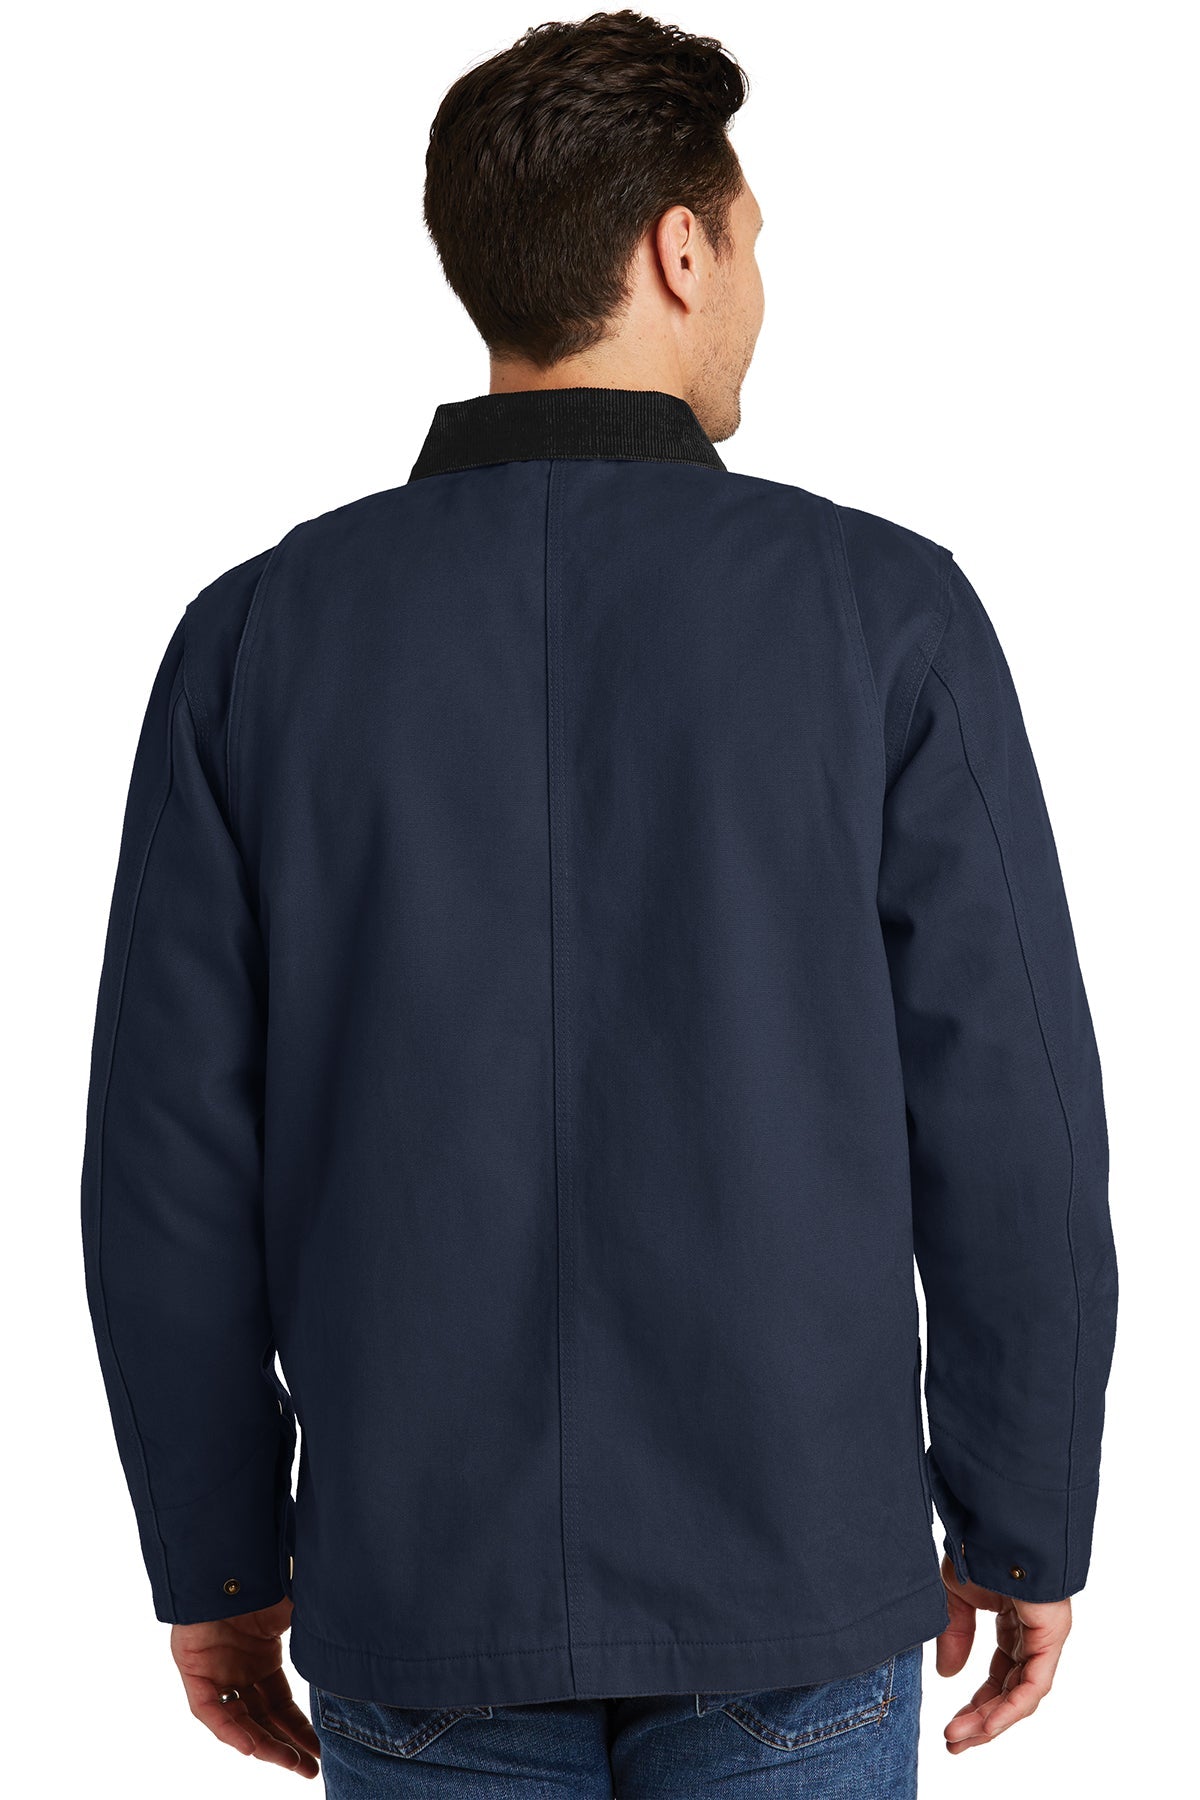 cornerstone_csj50 _navy_company_logo_jackets